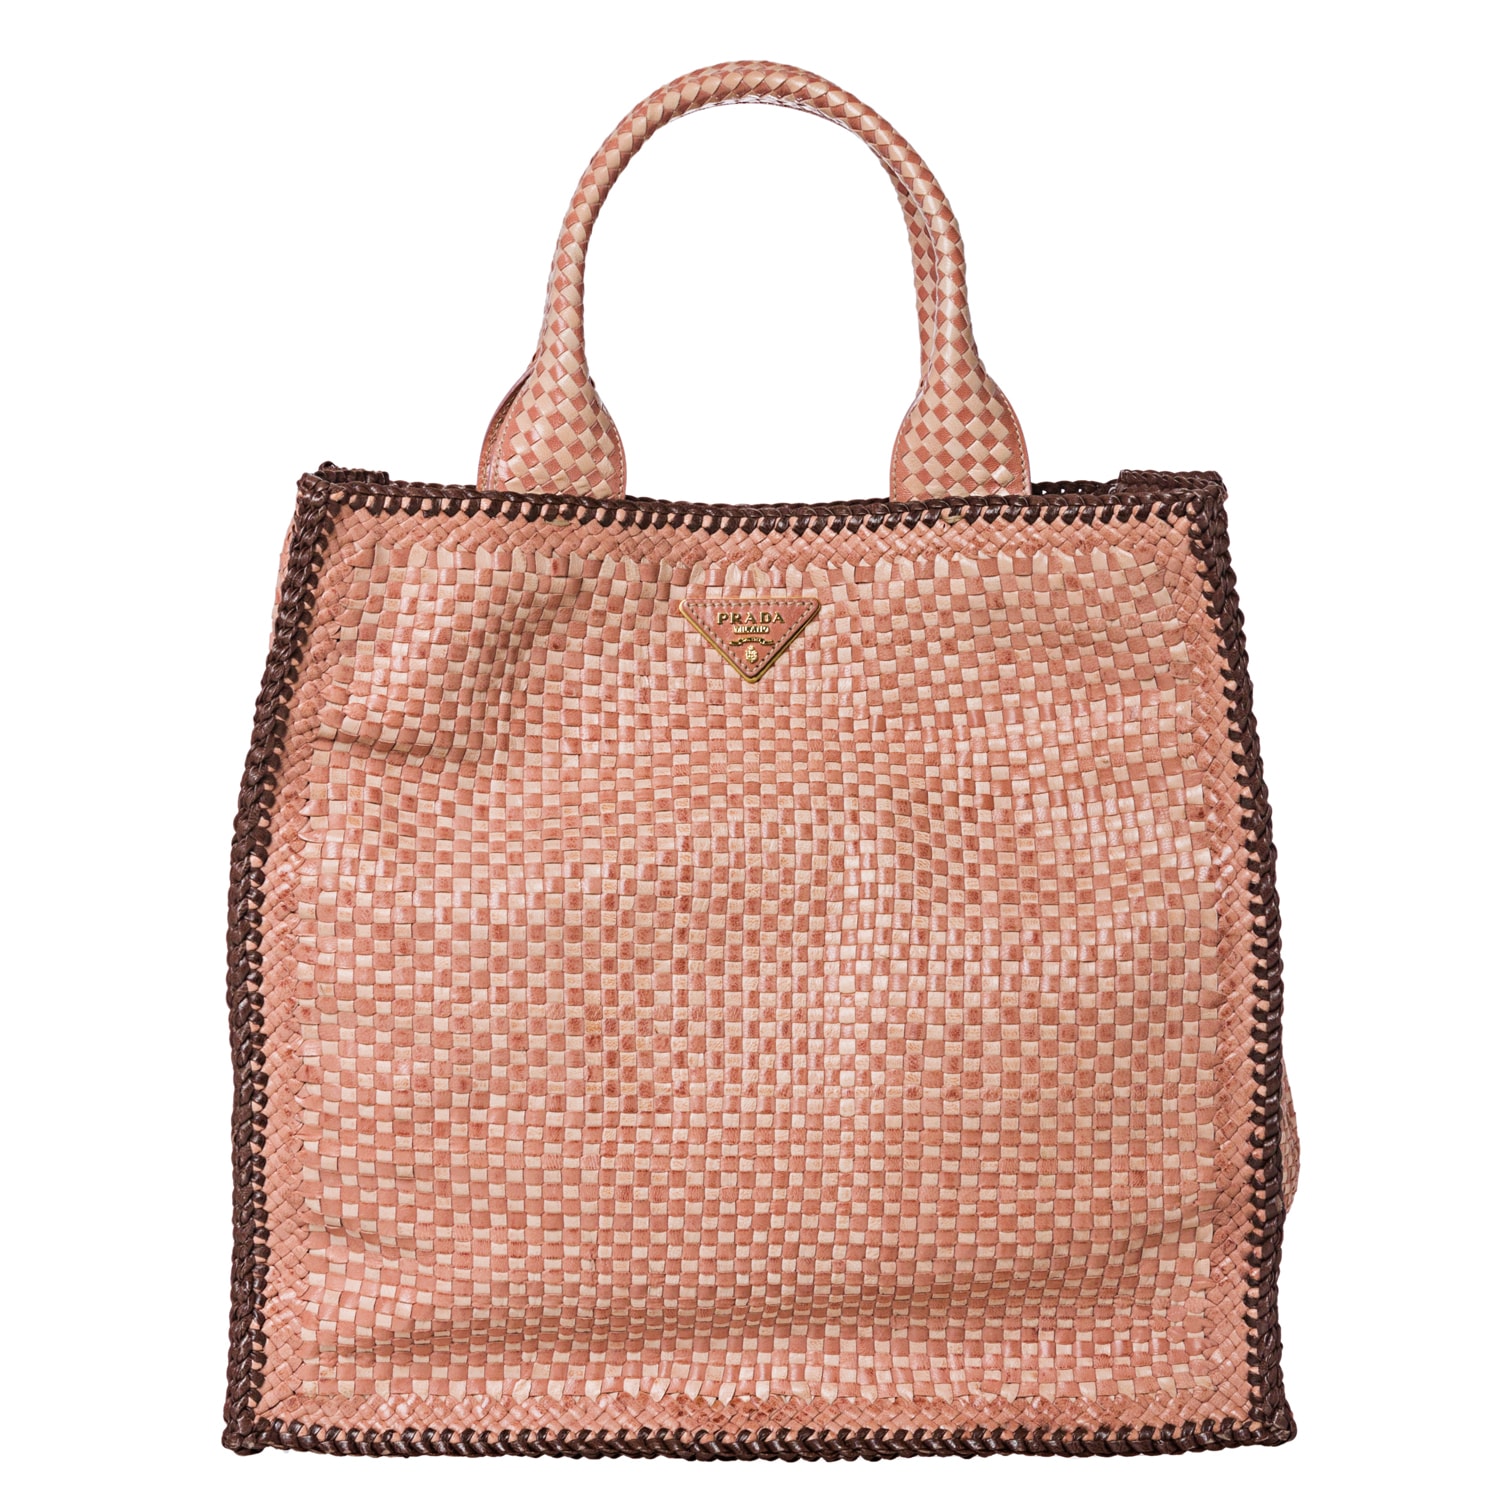 Prada Woven Rose Leather Madras Tote Bag - 14516808 - Overstock ...  